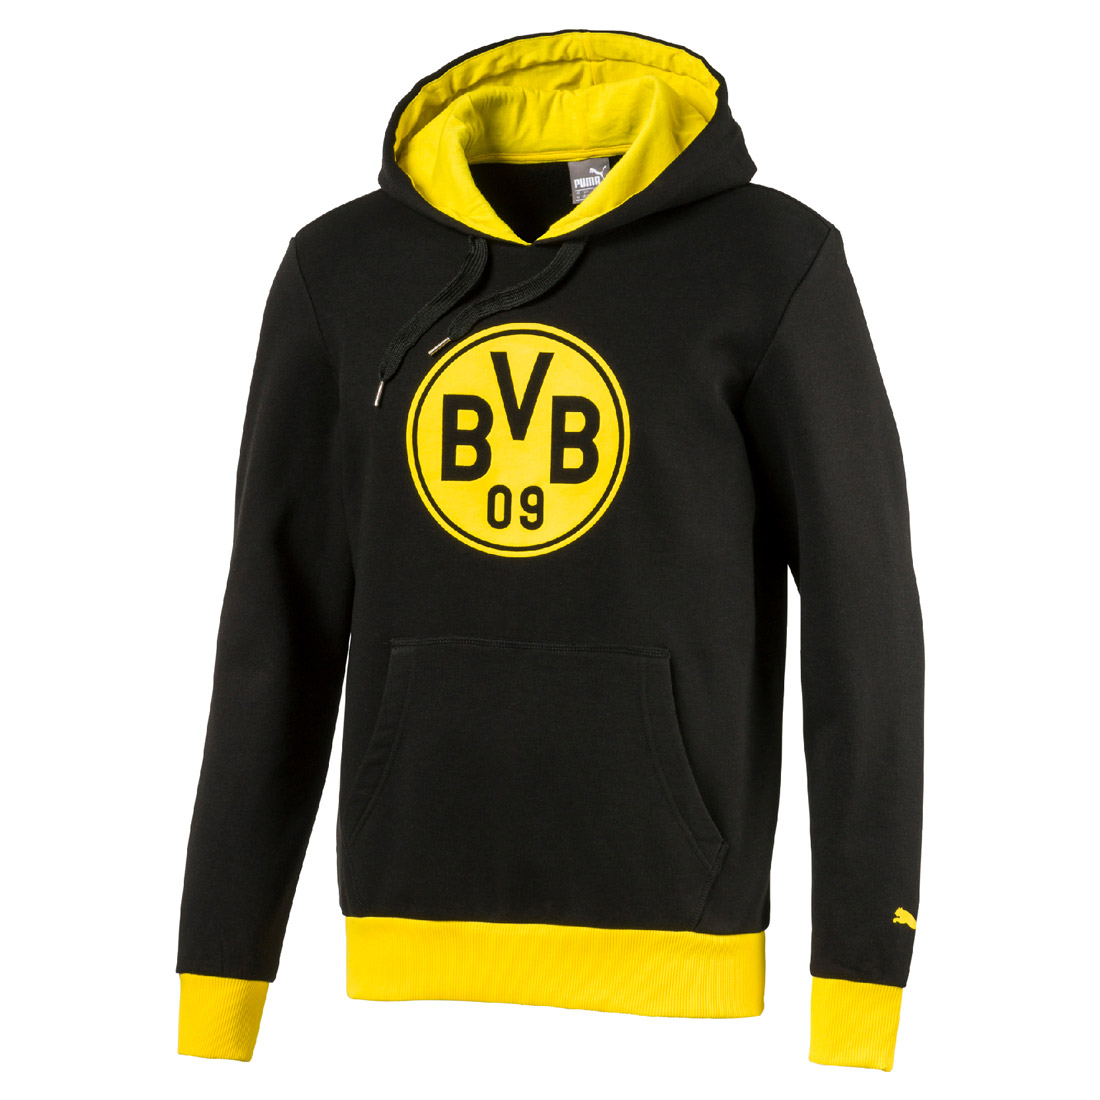 Puma BVB Badge Hoody Herren Sweatshirt Dortmund 09 schwarz